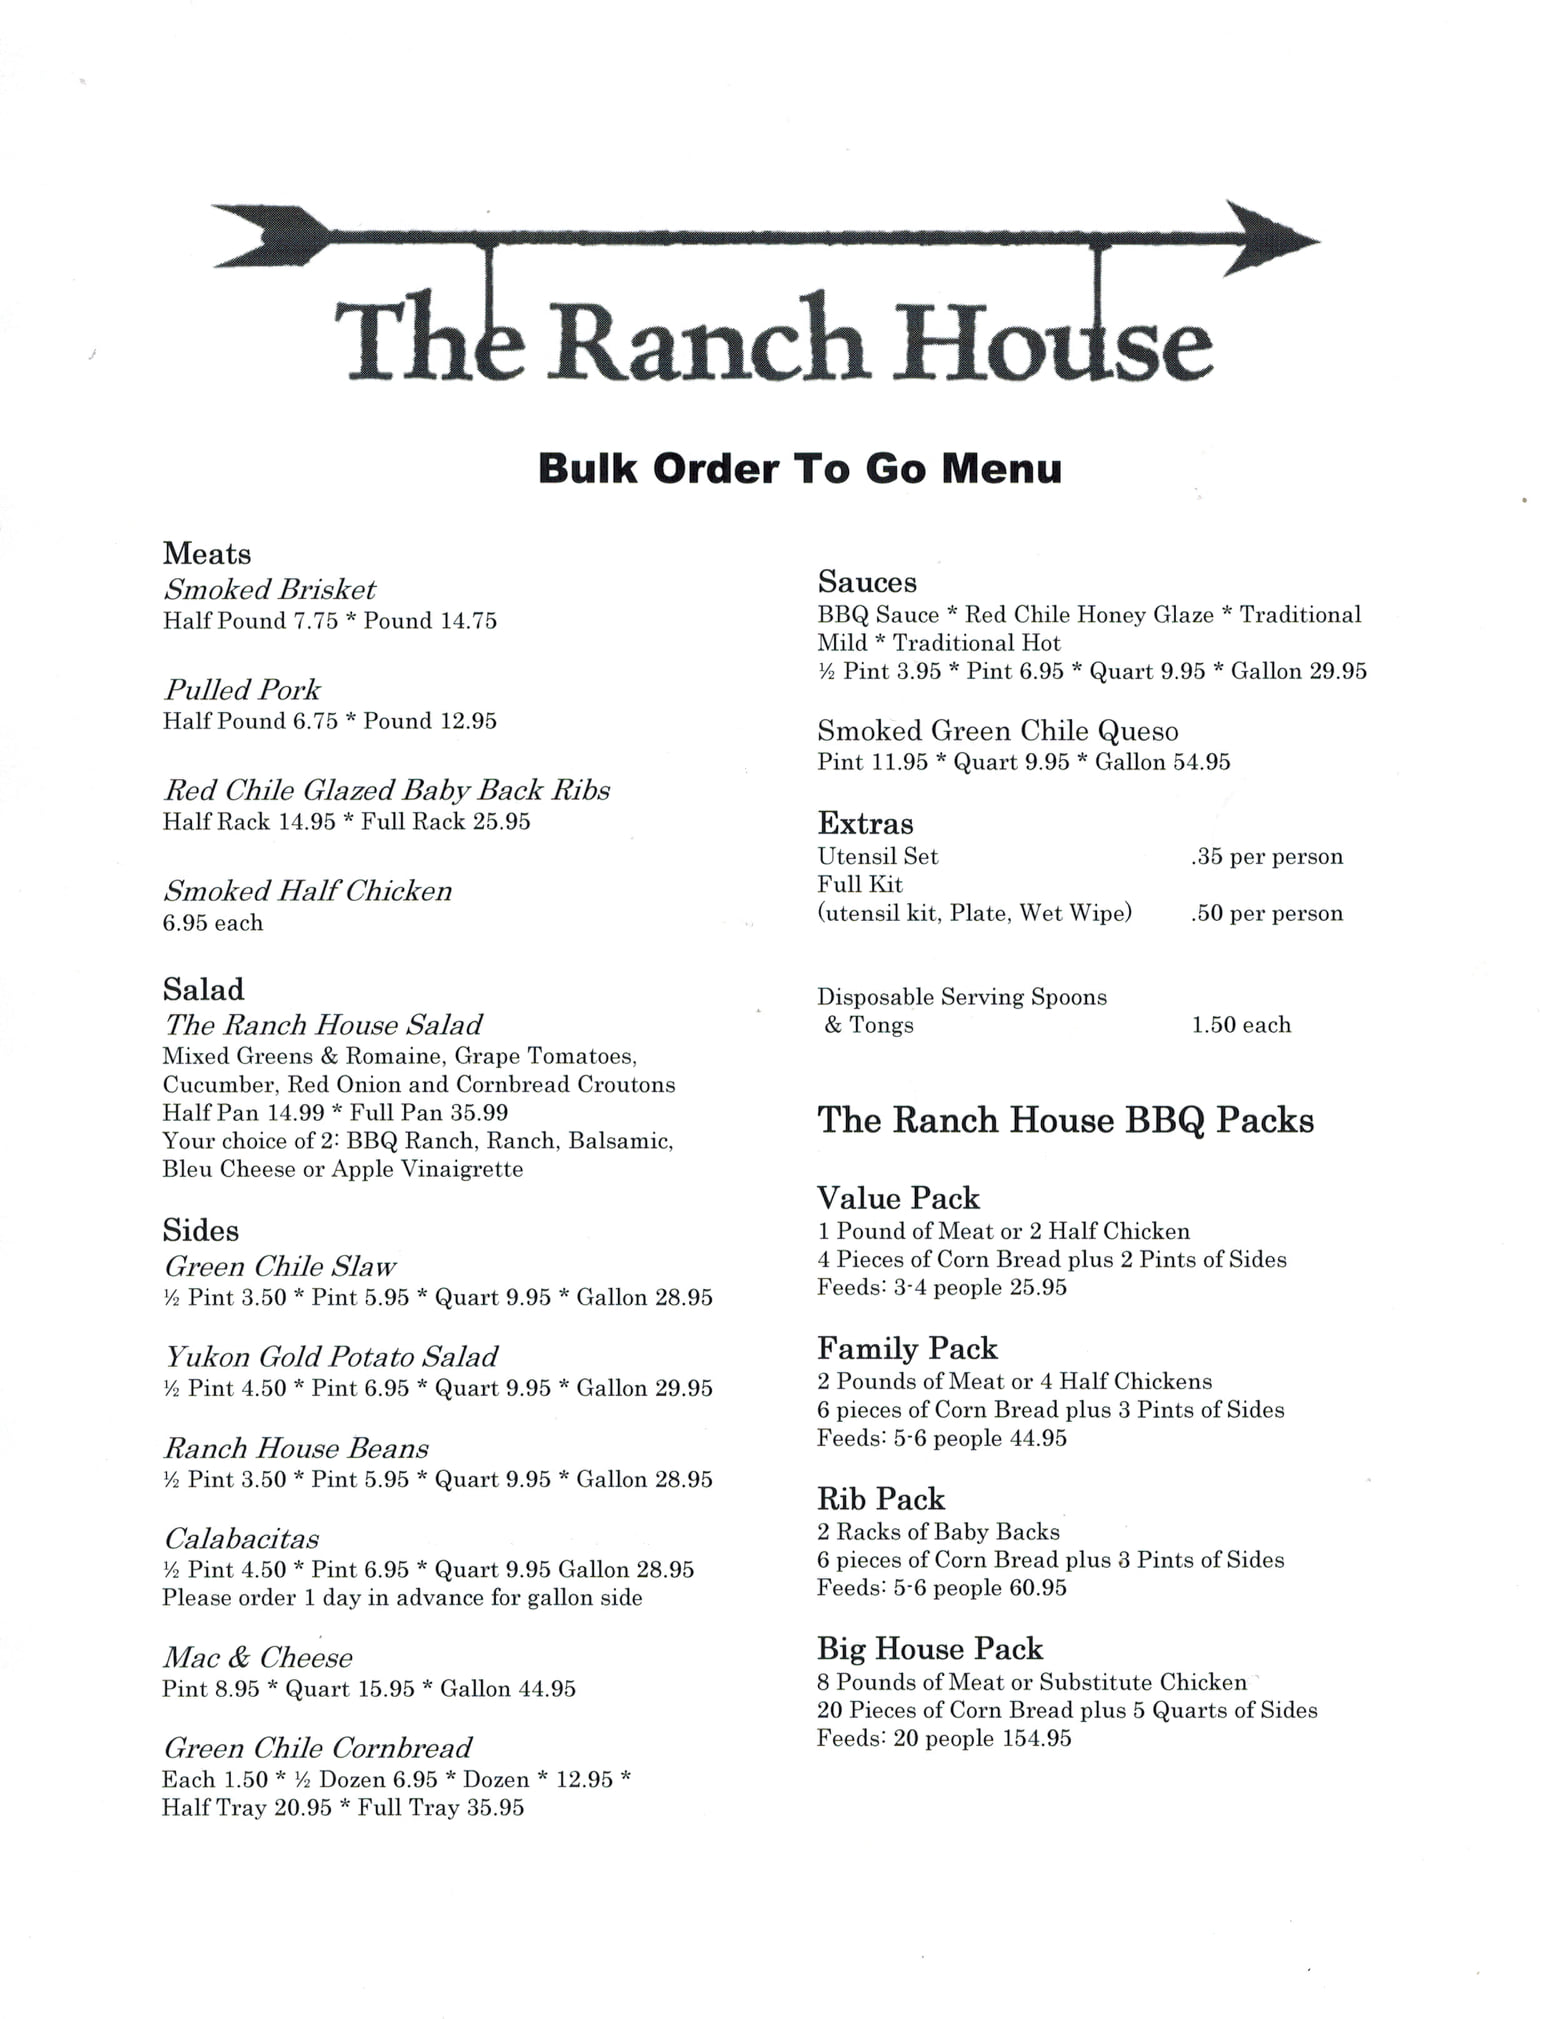 The Ranch House Menu